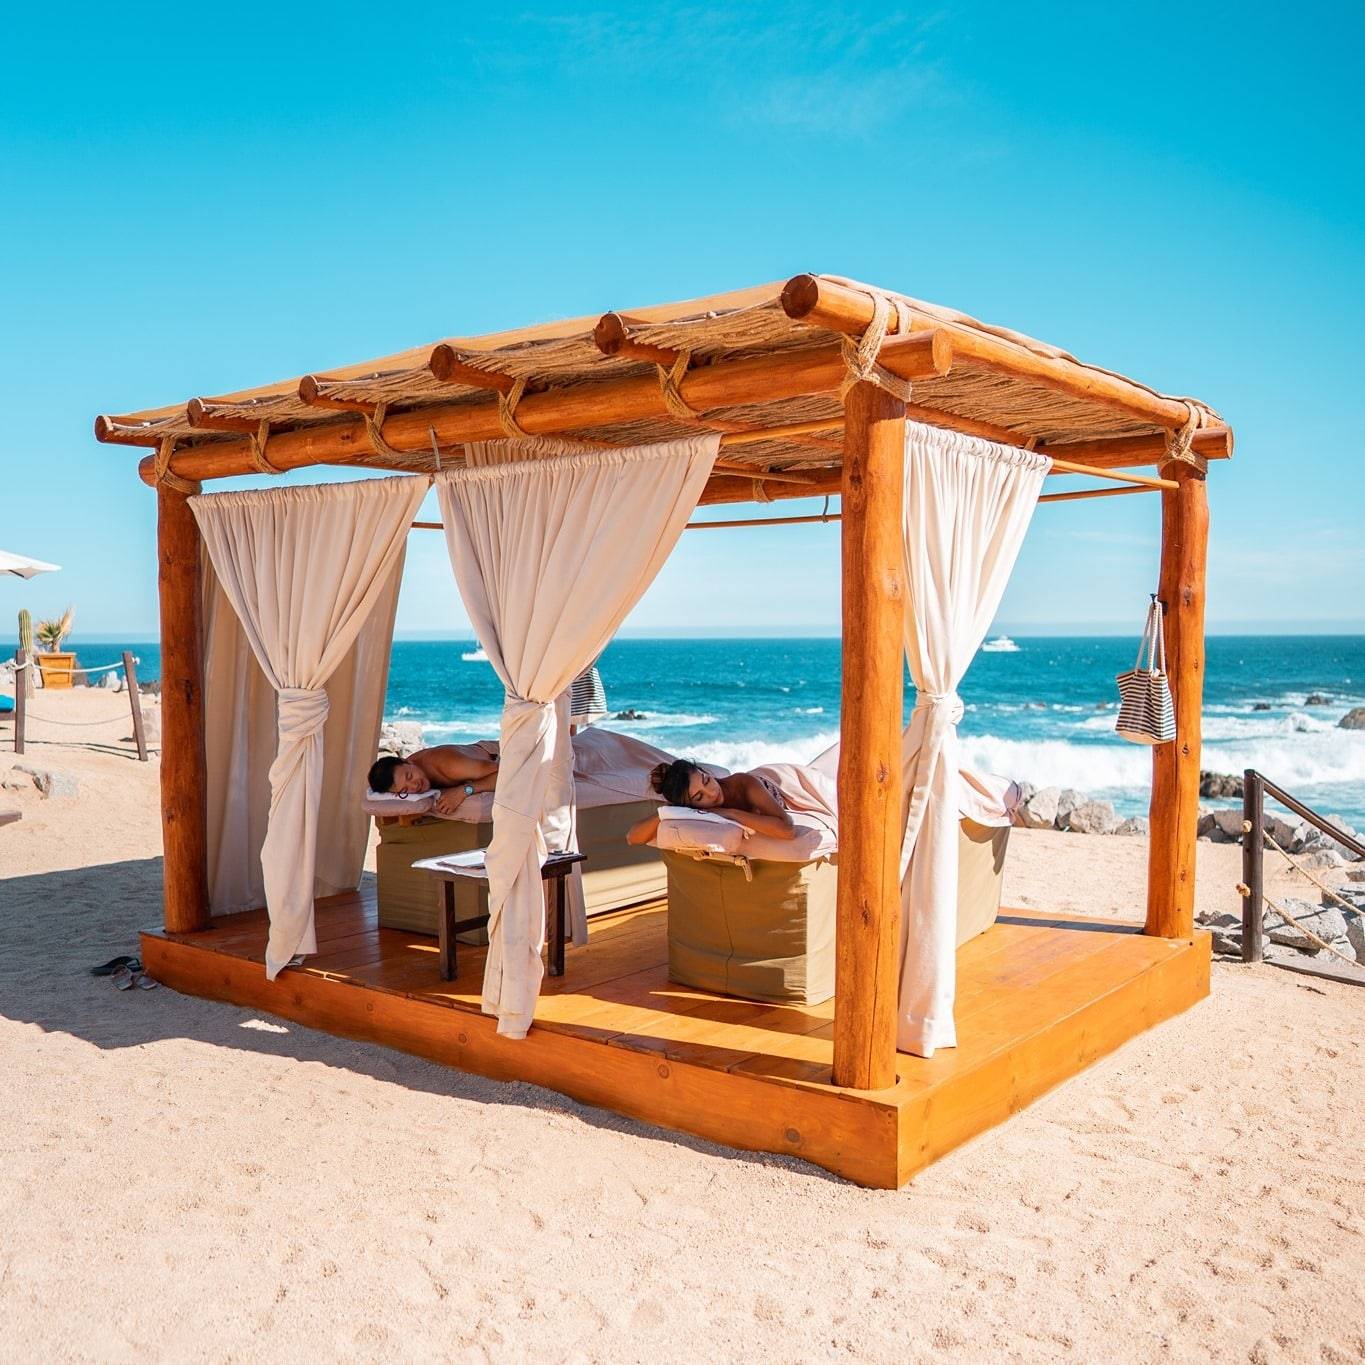 Luxurious Baja Resorts Nominated for Travel + Leisure Awards (1)